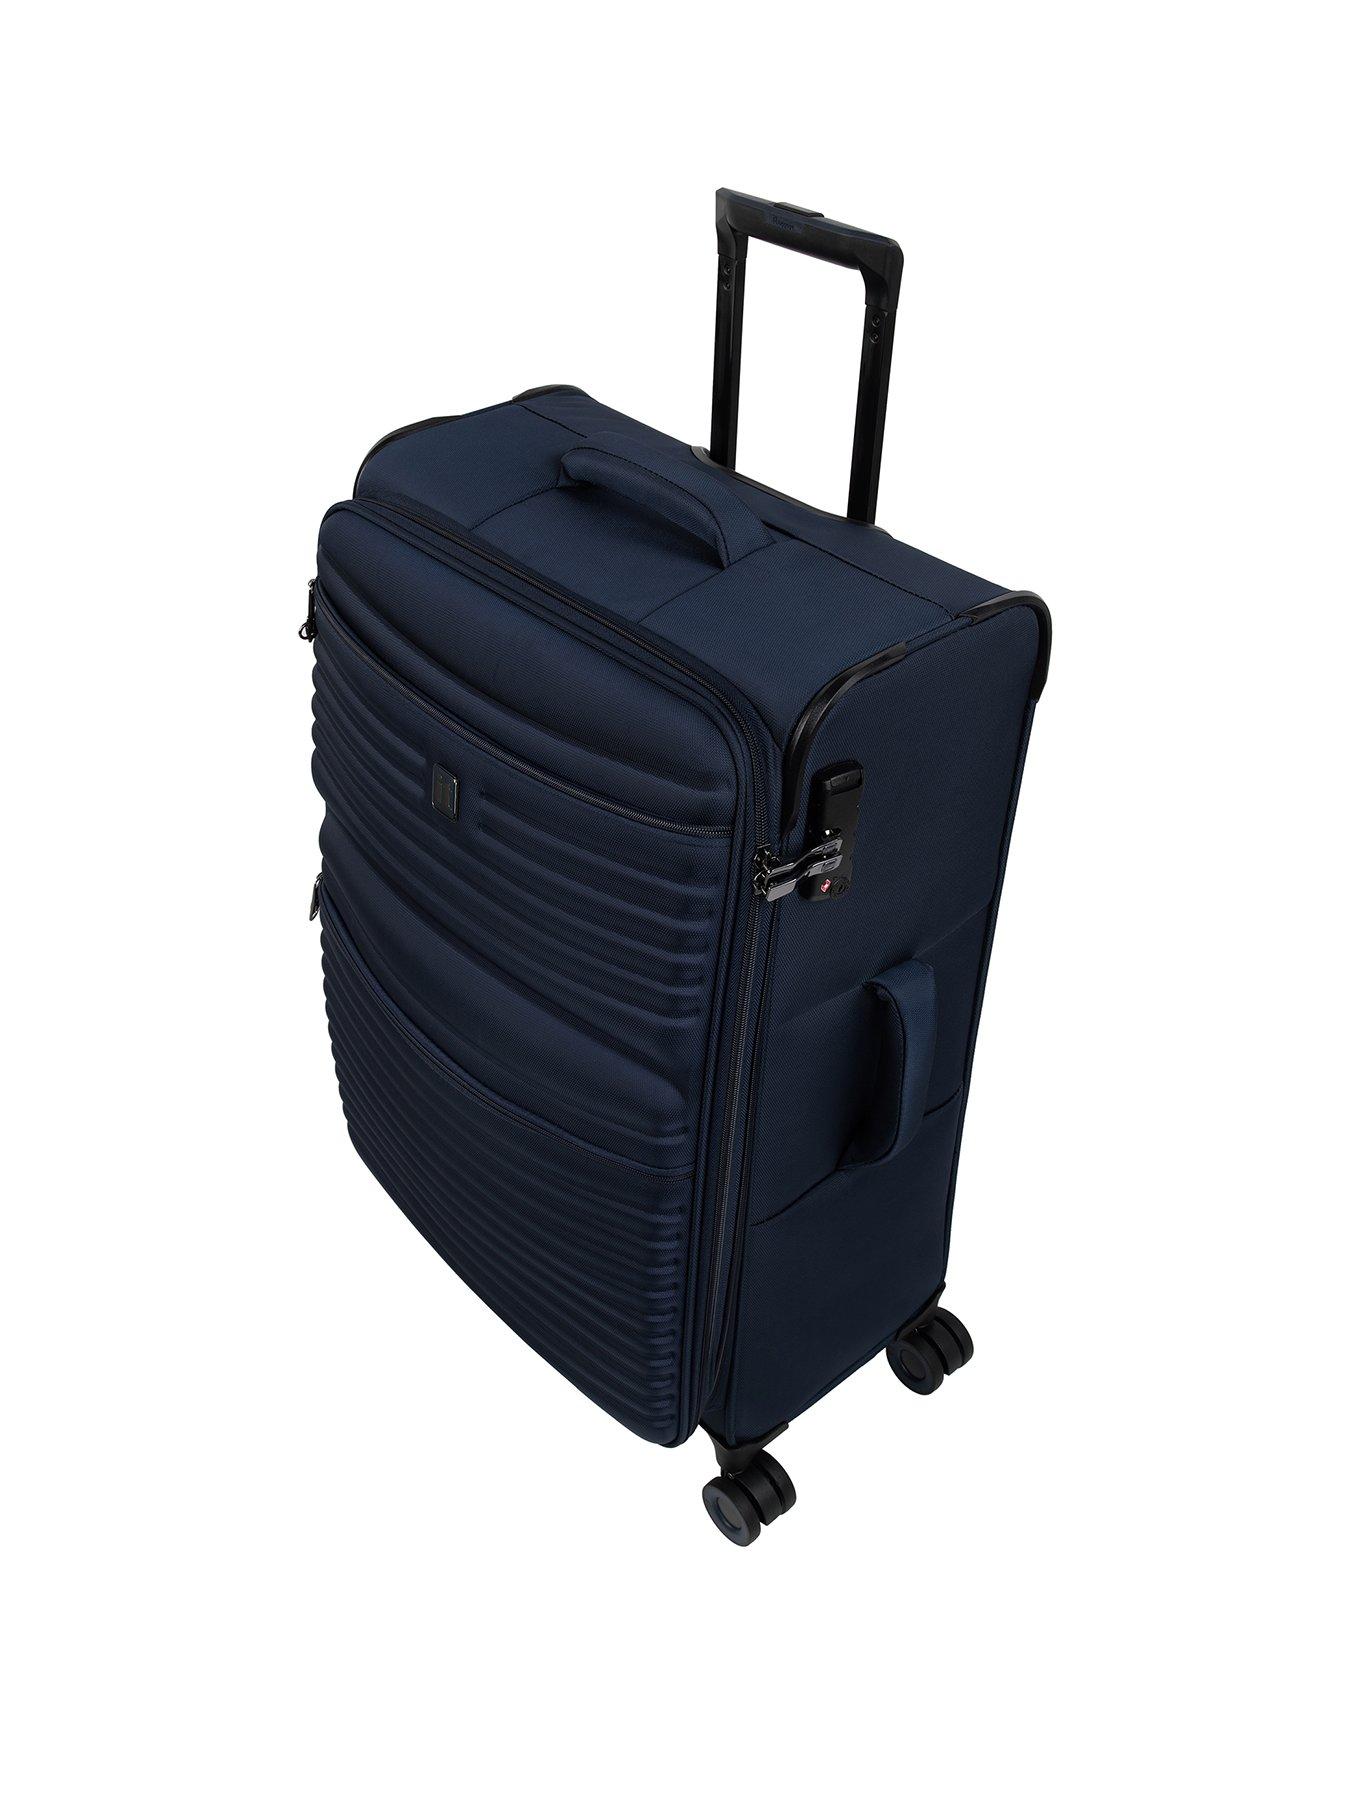 it Luggage Precursor Dress Blues Large Expandable Soft 8 Wheel Suitcase ...